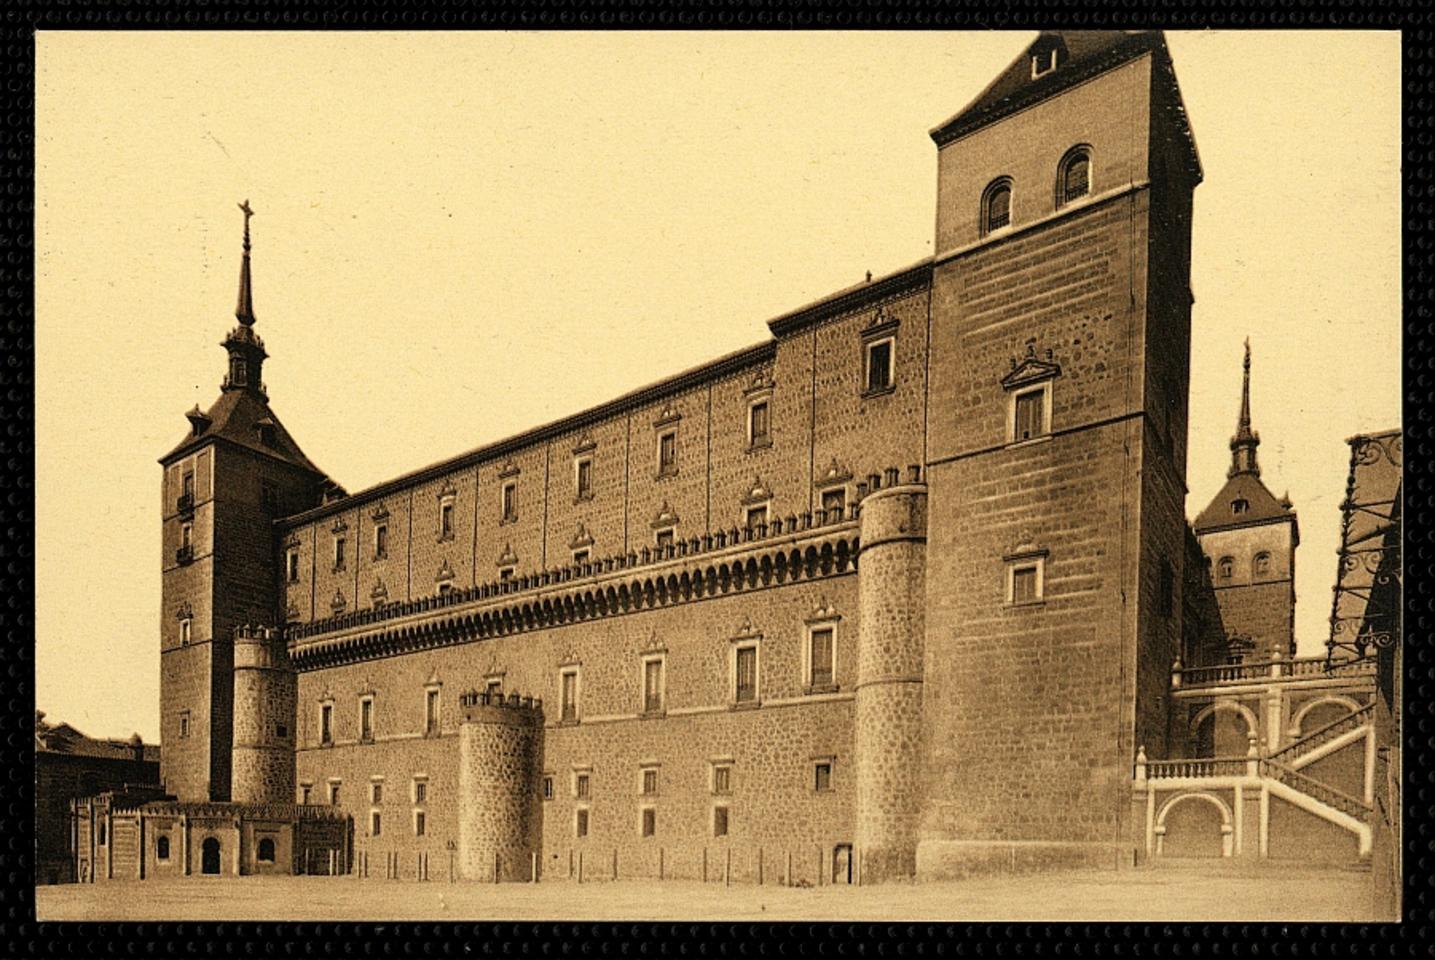 Toledo : Alcázar - Academia de Infantería / L. Roisin, fot.-. [Imagen]